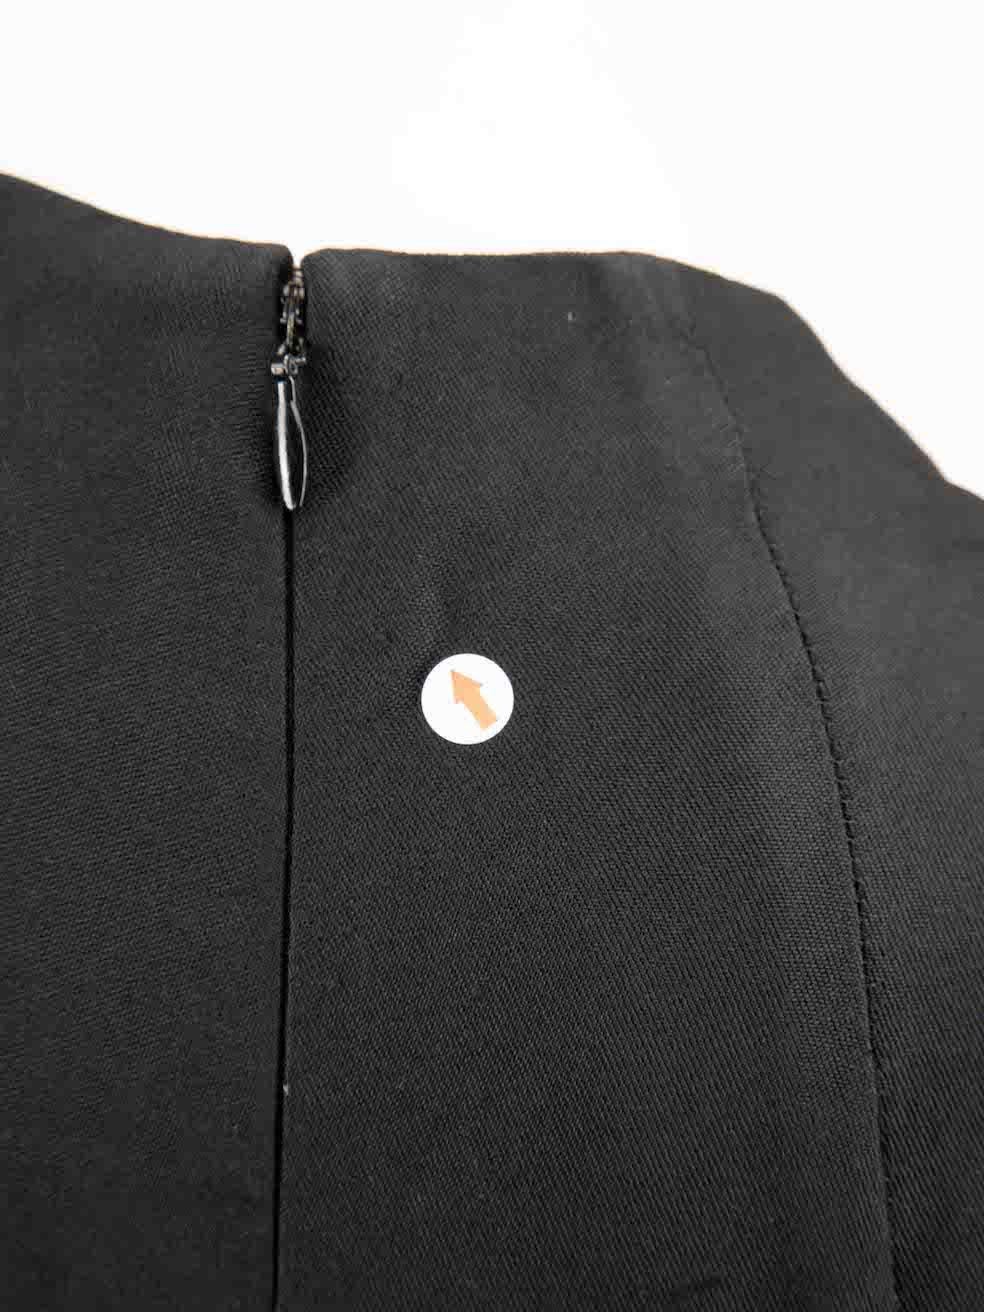 Yohji Yamamoto Black Cap Sleeve Midi Dress Size M For Sale 3